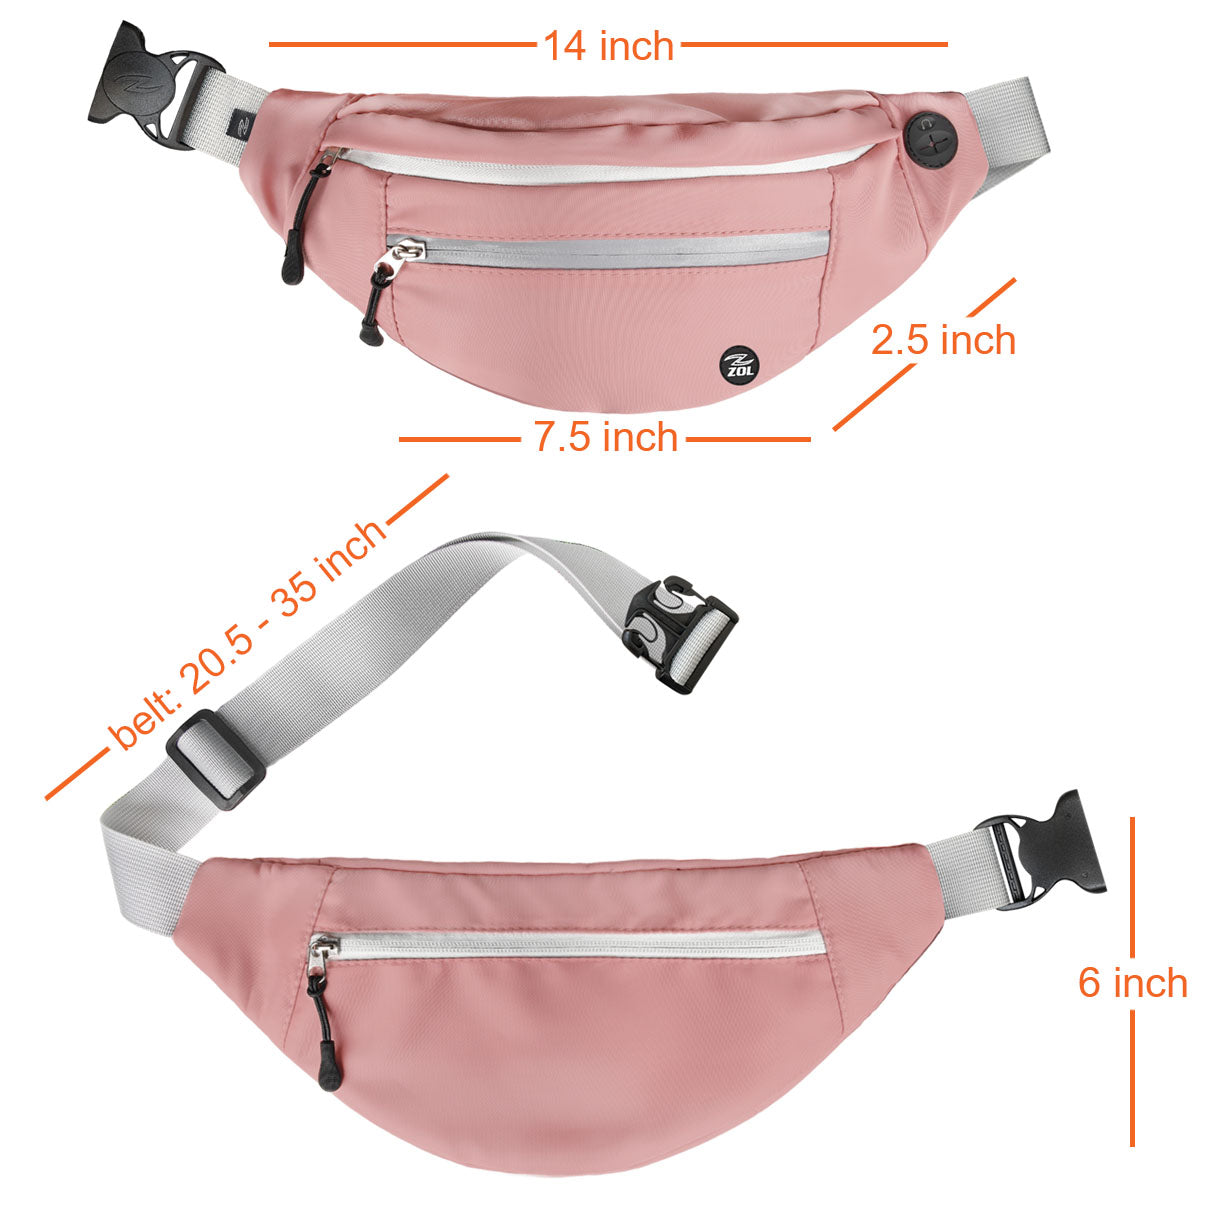 Zol Moda Waist Bag (Pink) - Zol Cycling